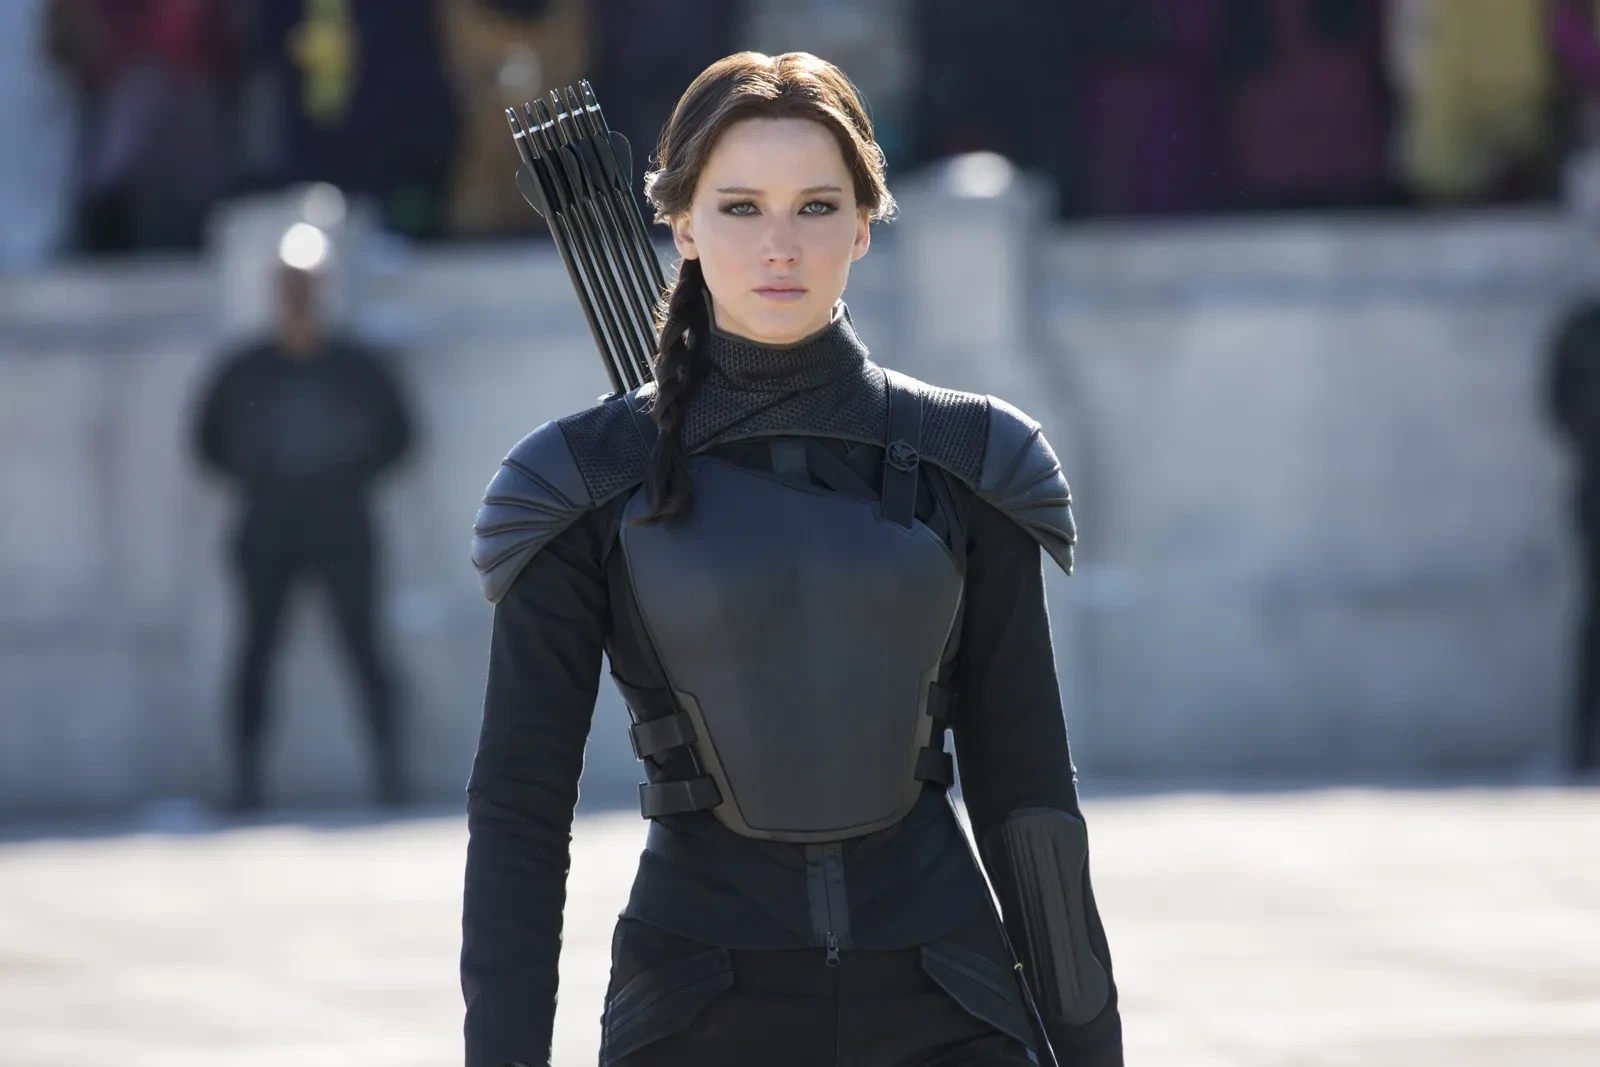 Jennifer Lawrence as Katniss Everdeen in The Hunger Games franchise.